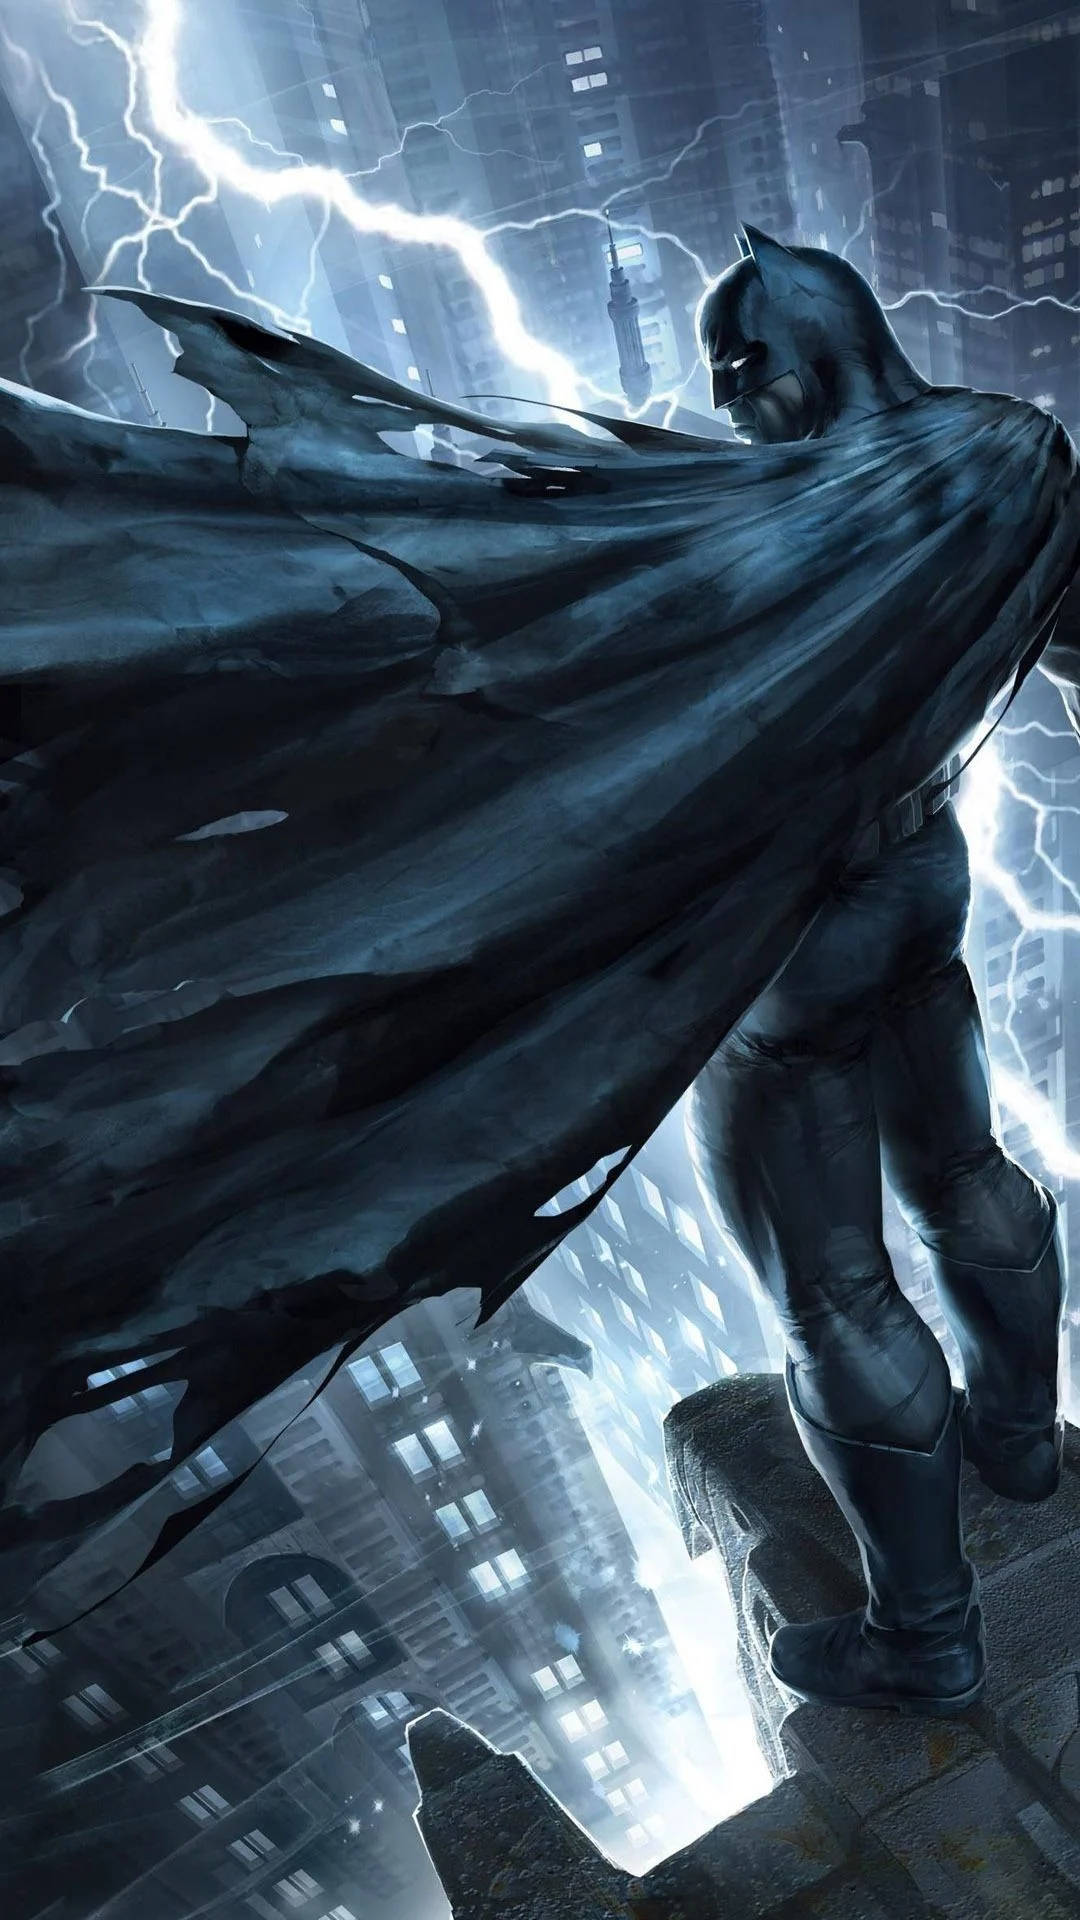 Batman In Action On Rooftops - Arkham City Iphone Wallpaper Wallpaper